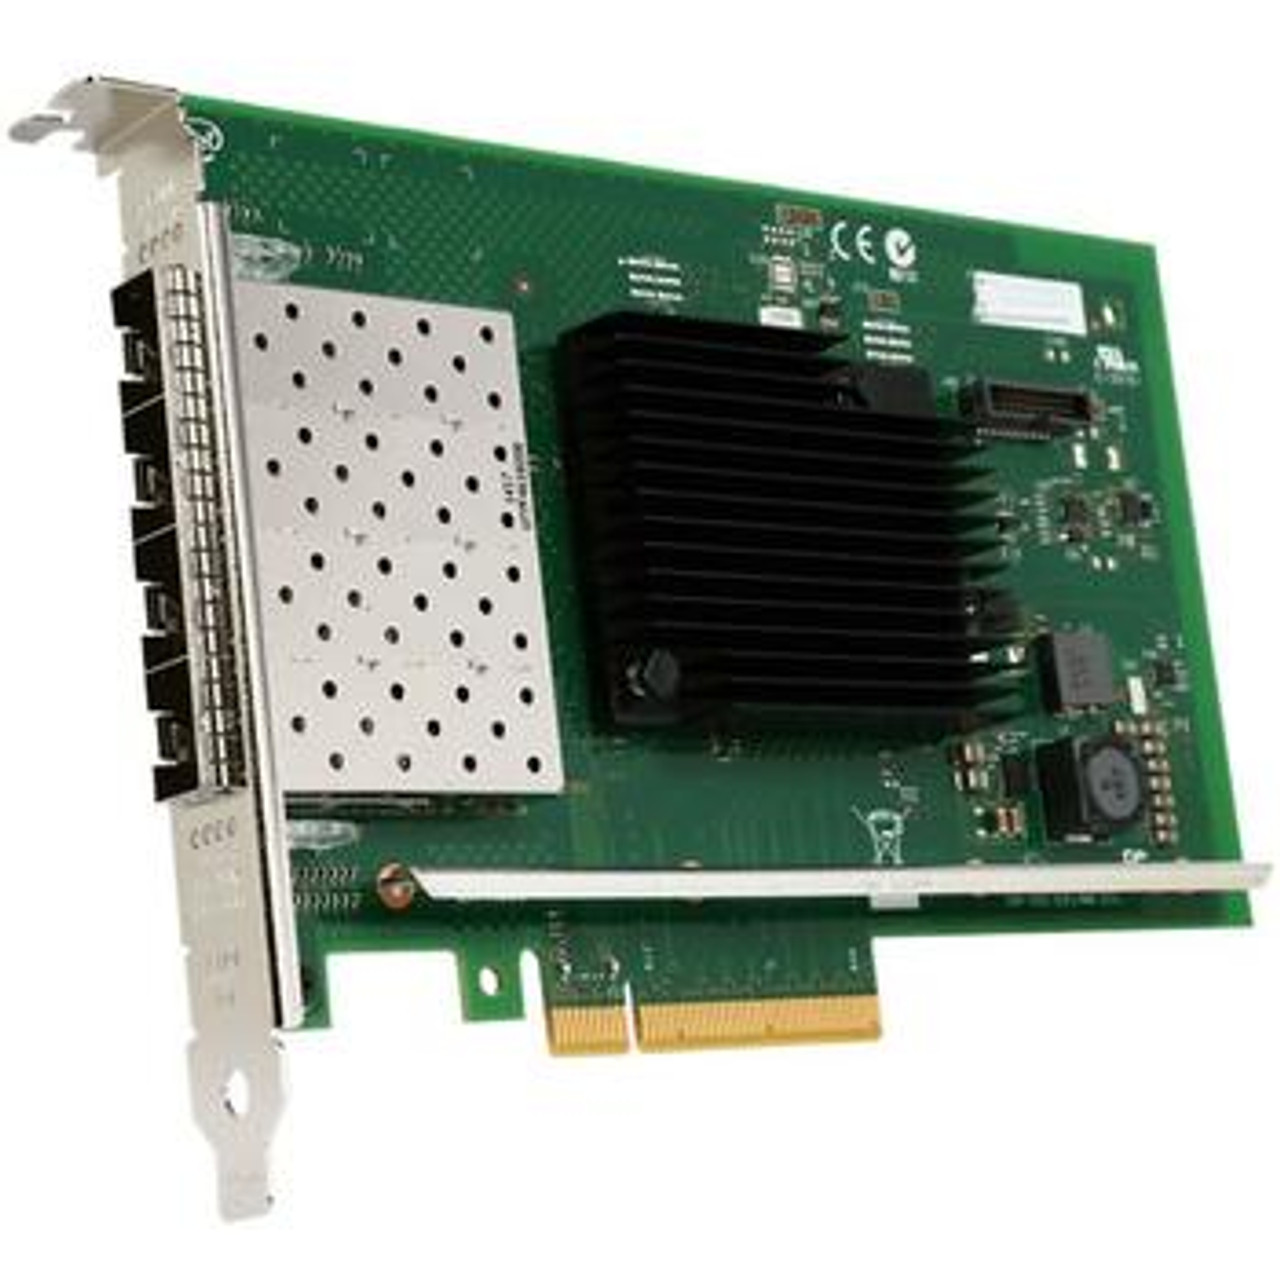 X710-DA4 Intel X710 Quad-Ports 10Gbps PCI Express 3.0 x8 Ethernet Converged Network Adapter